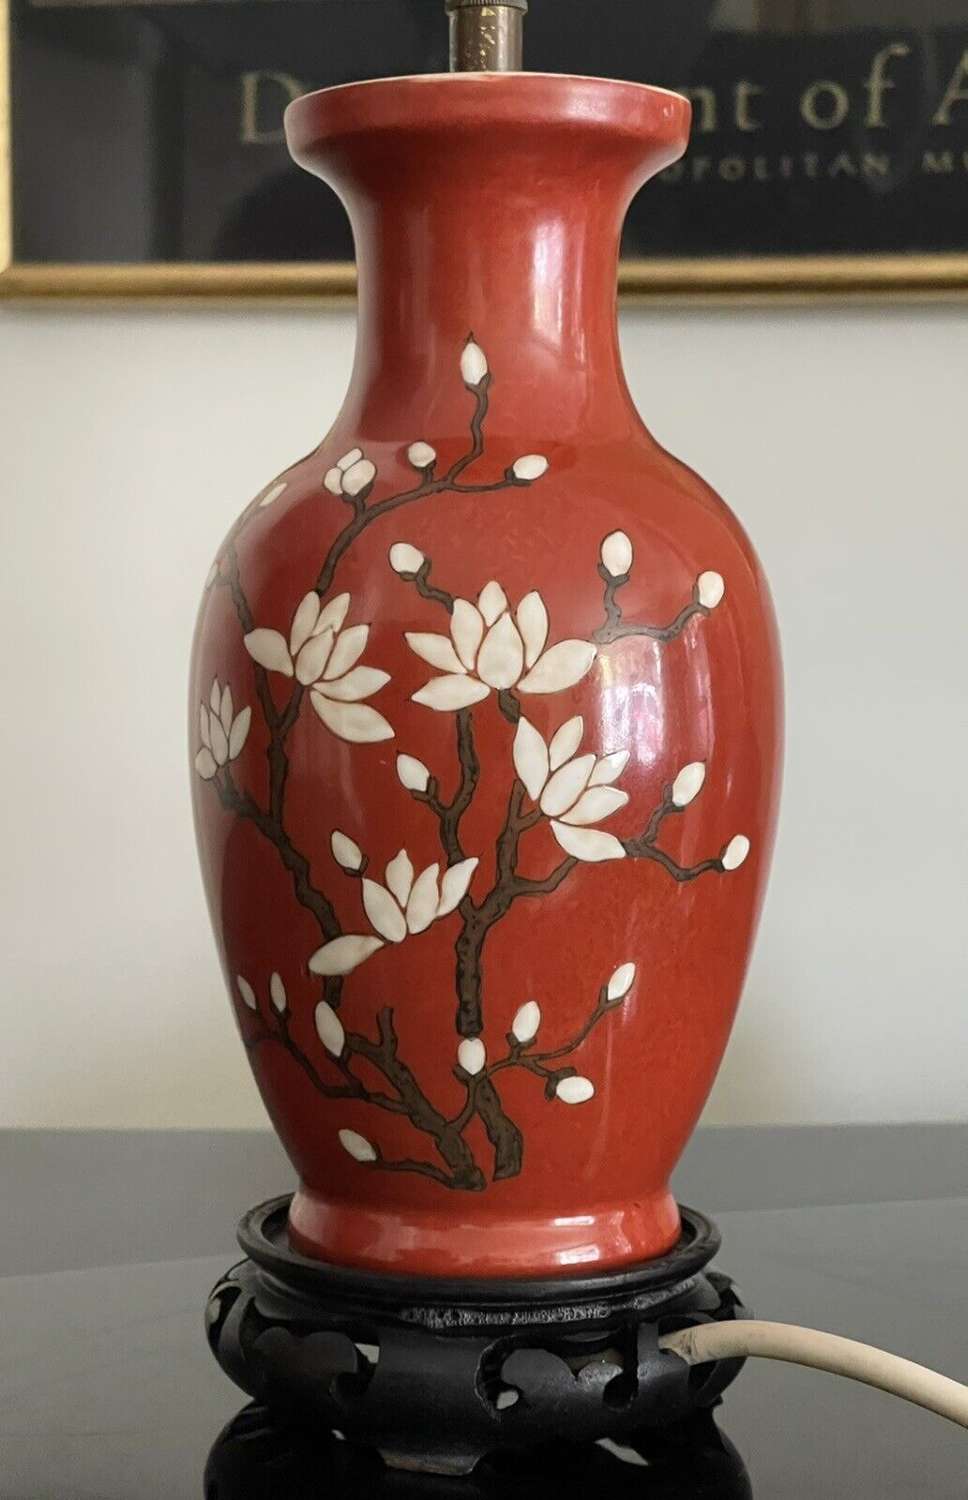 Vintage magnolia blossom red ground lamp base.